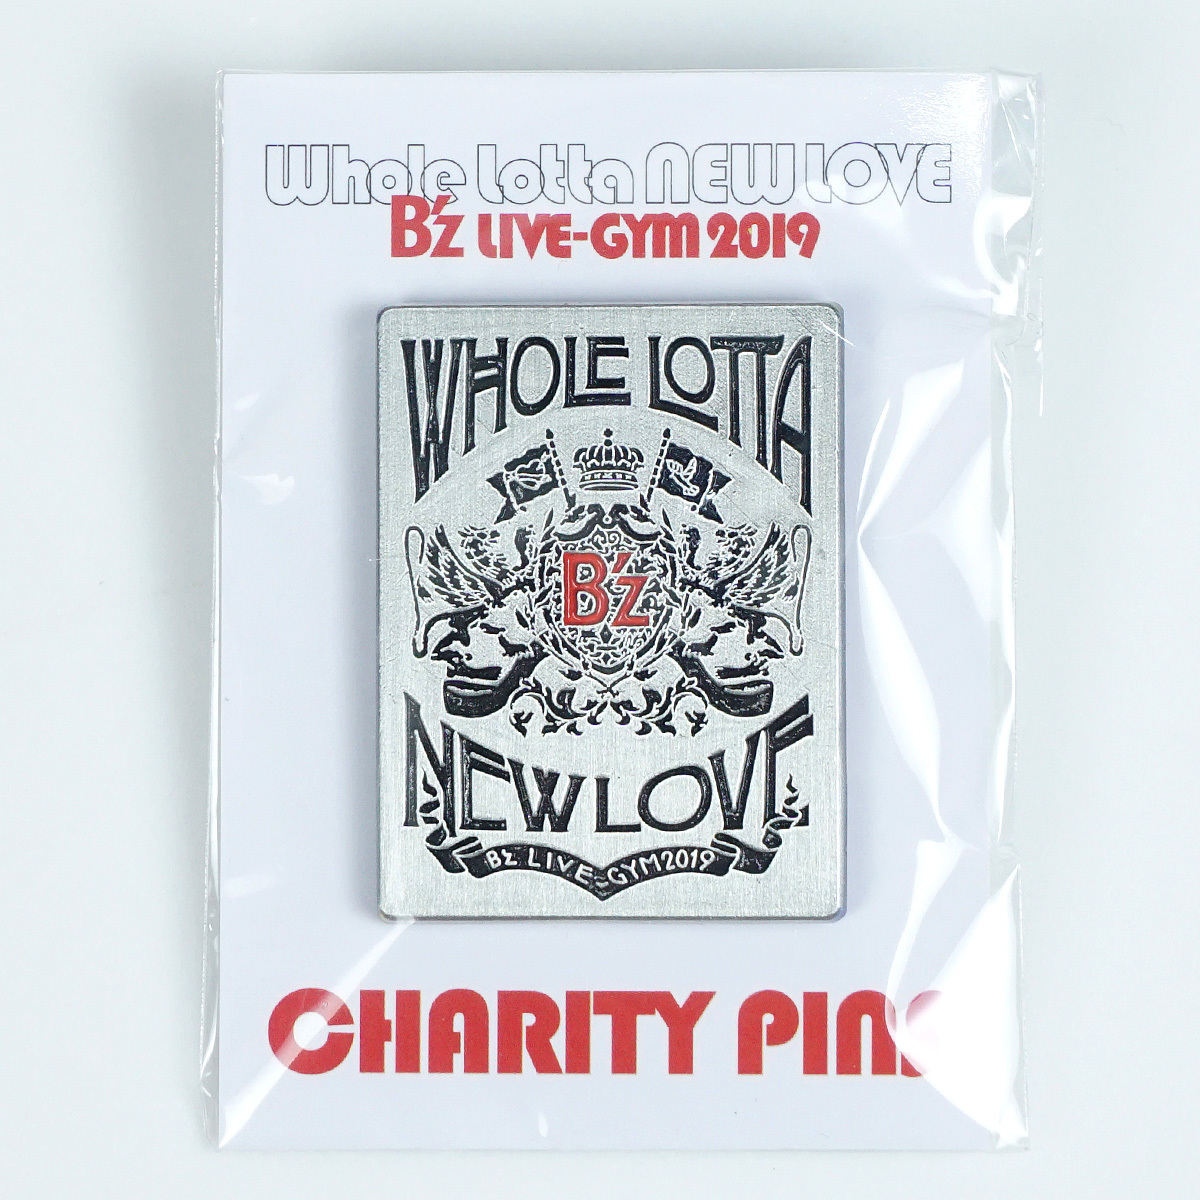 ■B'z LIVE-GYM 2019 Whole lotta NEW LOVE CHARITY PINS チャリティーピンズ ピンバッジ 稲葉浩志 松本孝弘 ライブグッズ■S